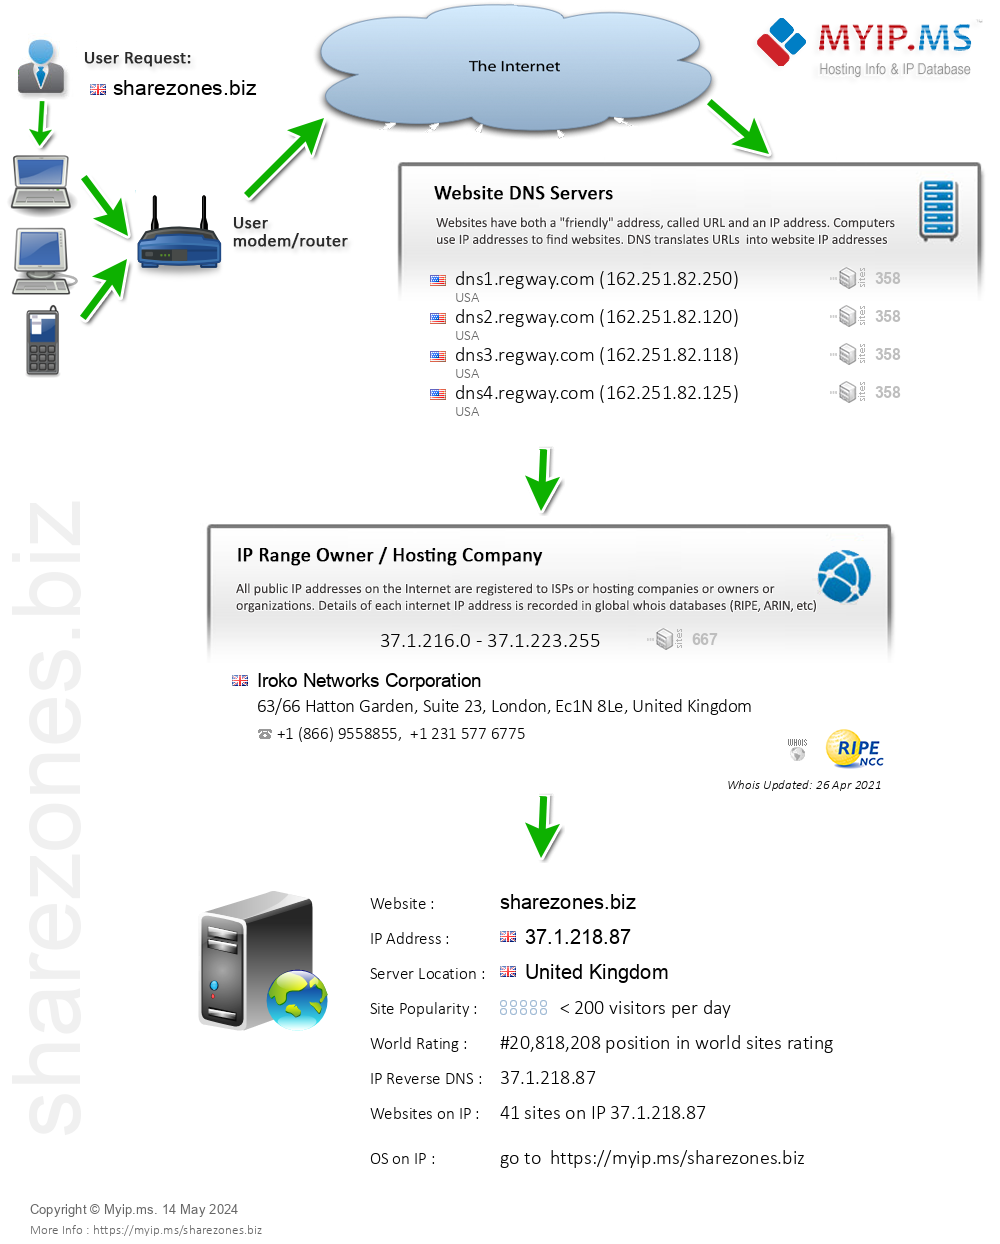 Sharezones.biz - Website Hosting Visual IP Diagram